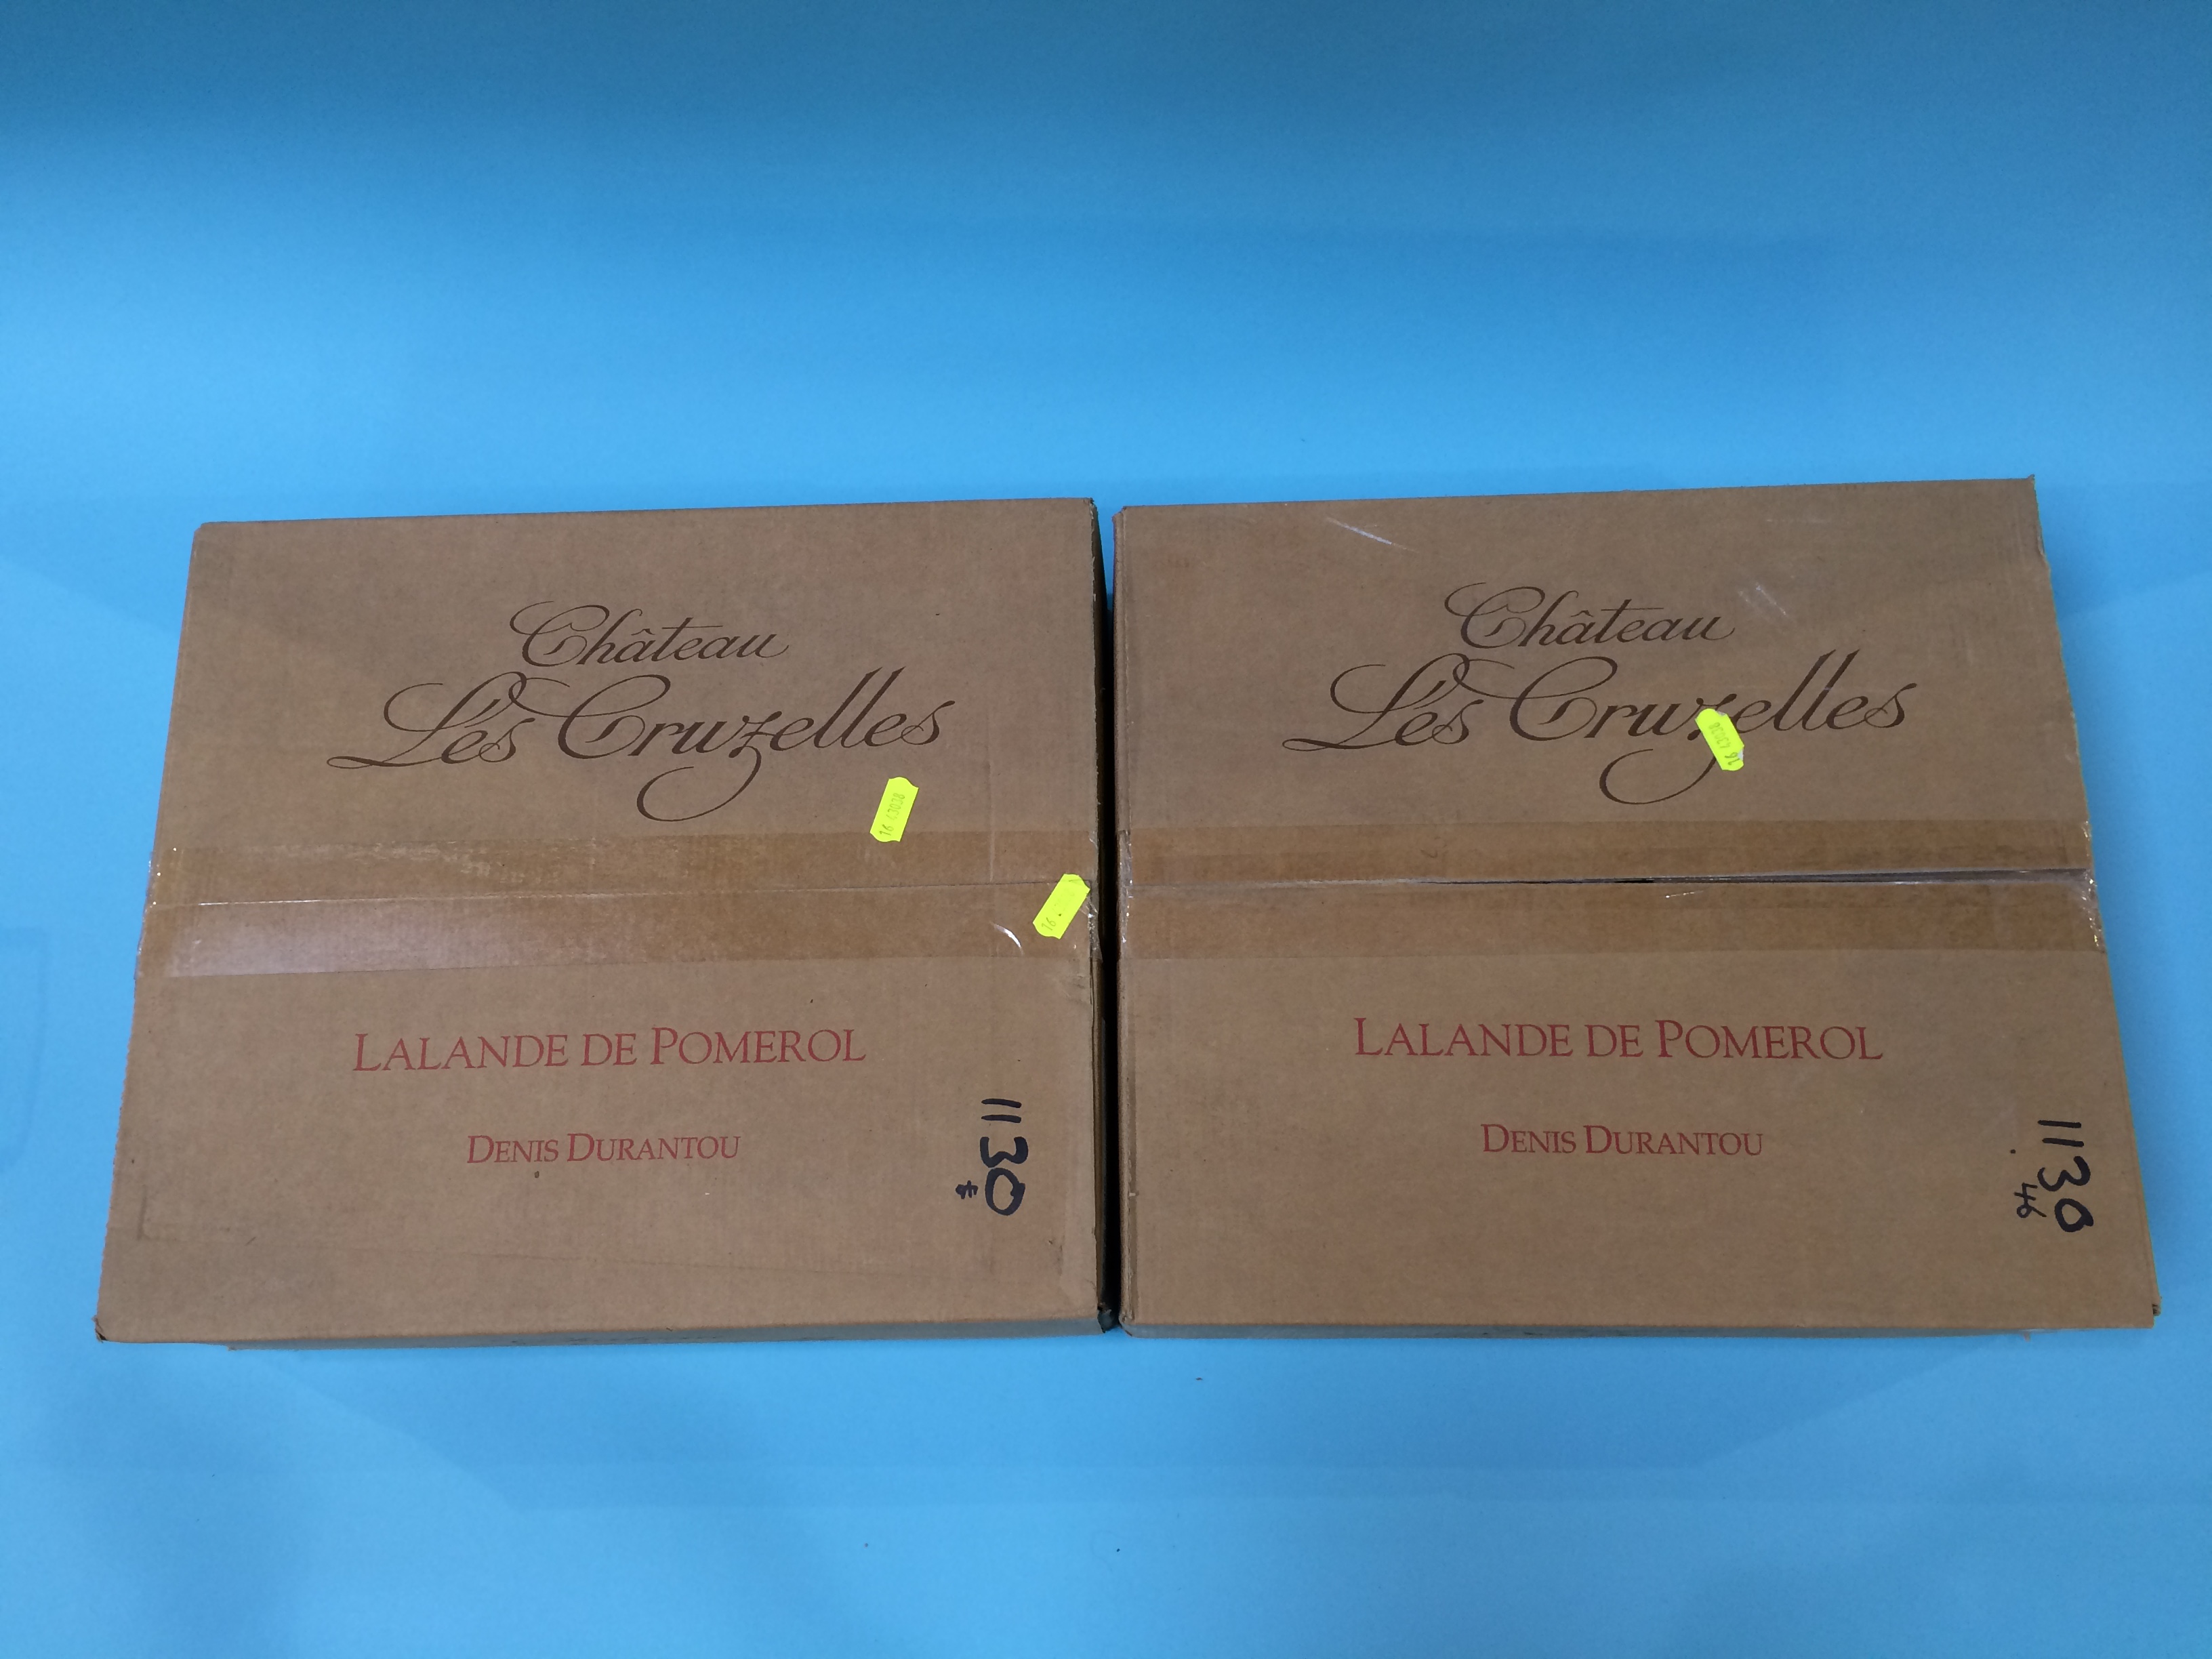 Chateau Les Cruzelles, 2013 (6 bottles (1500ml bottles) - 2 crates)